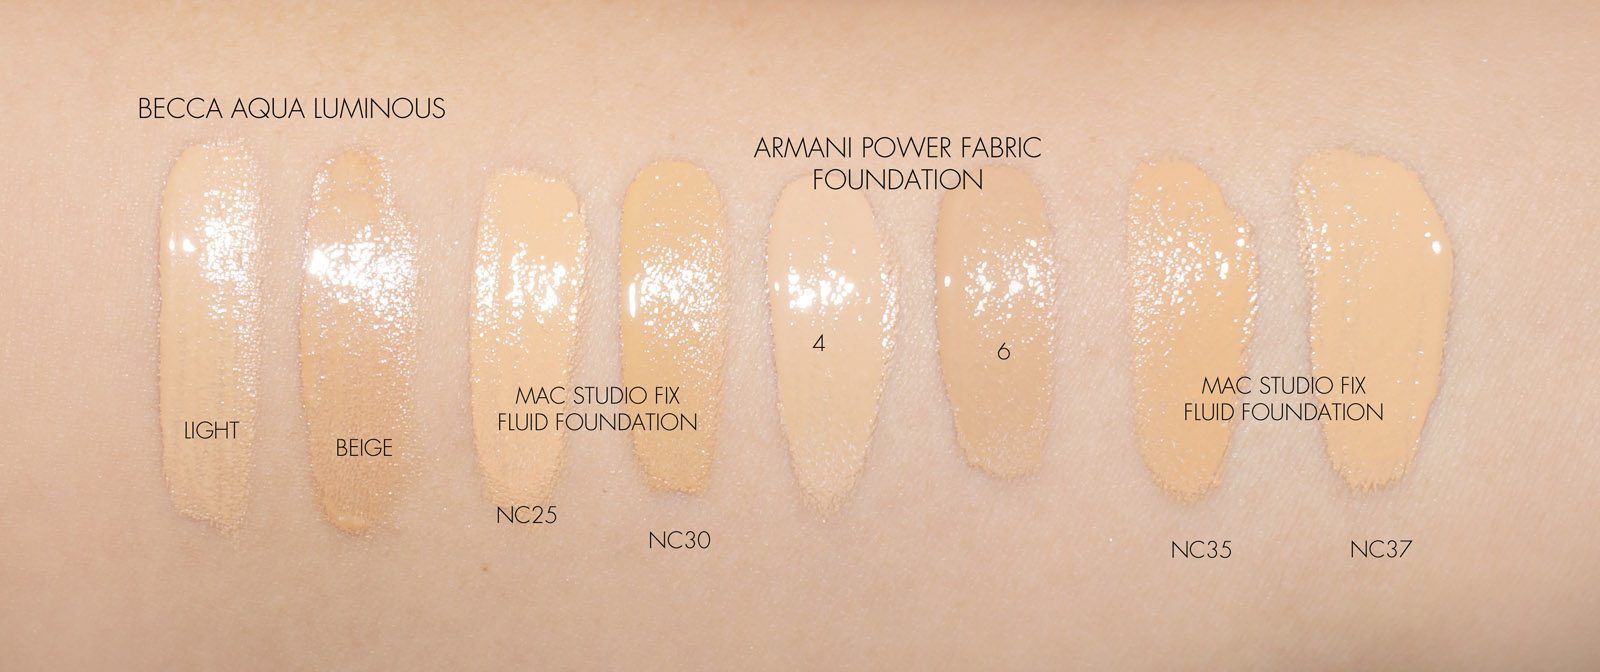 armani power fabric foundation 3.5